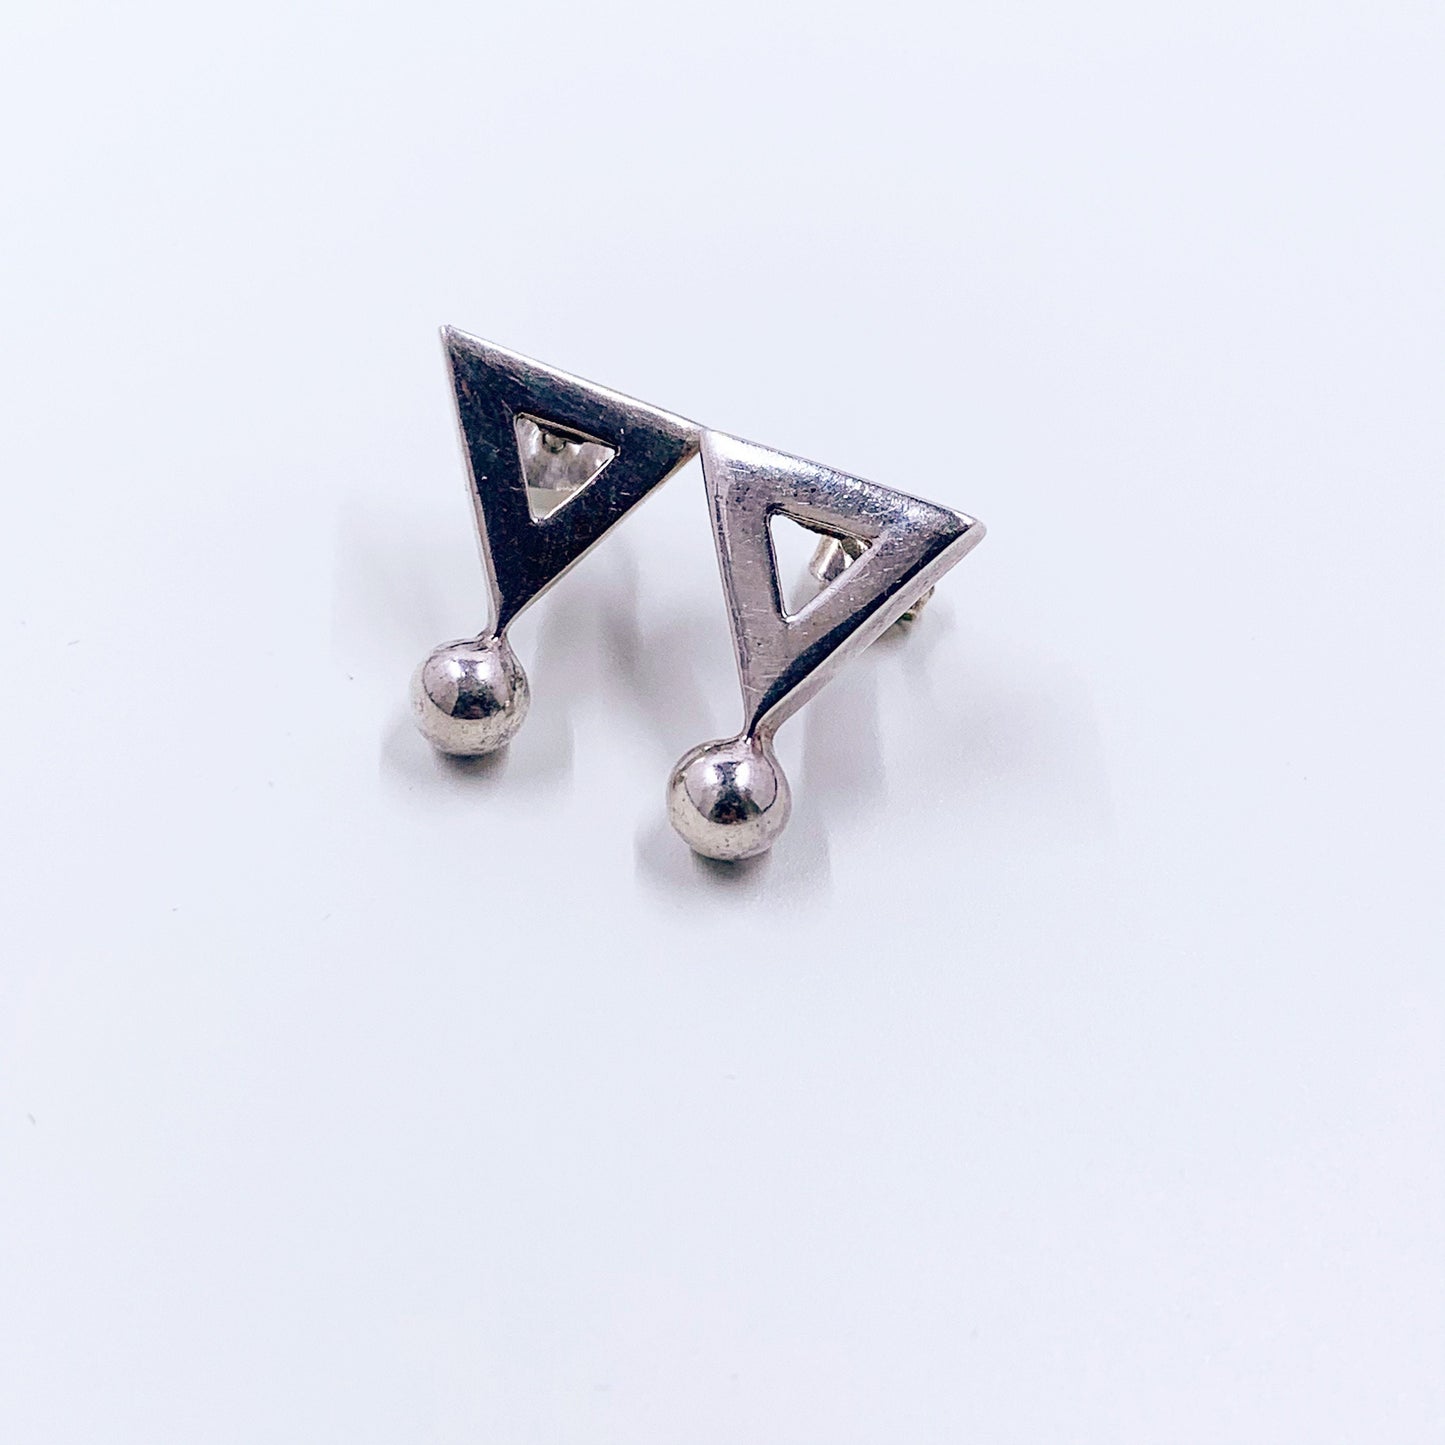 Vintage Silver Modernist Triangle Earrings | Vintage Geometric Triangle Earrings